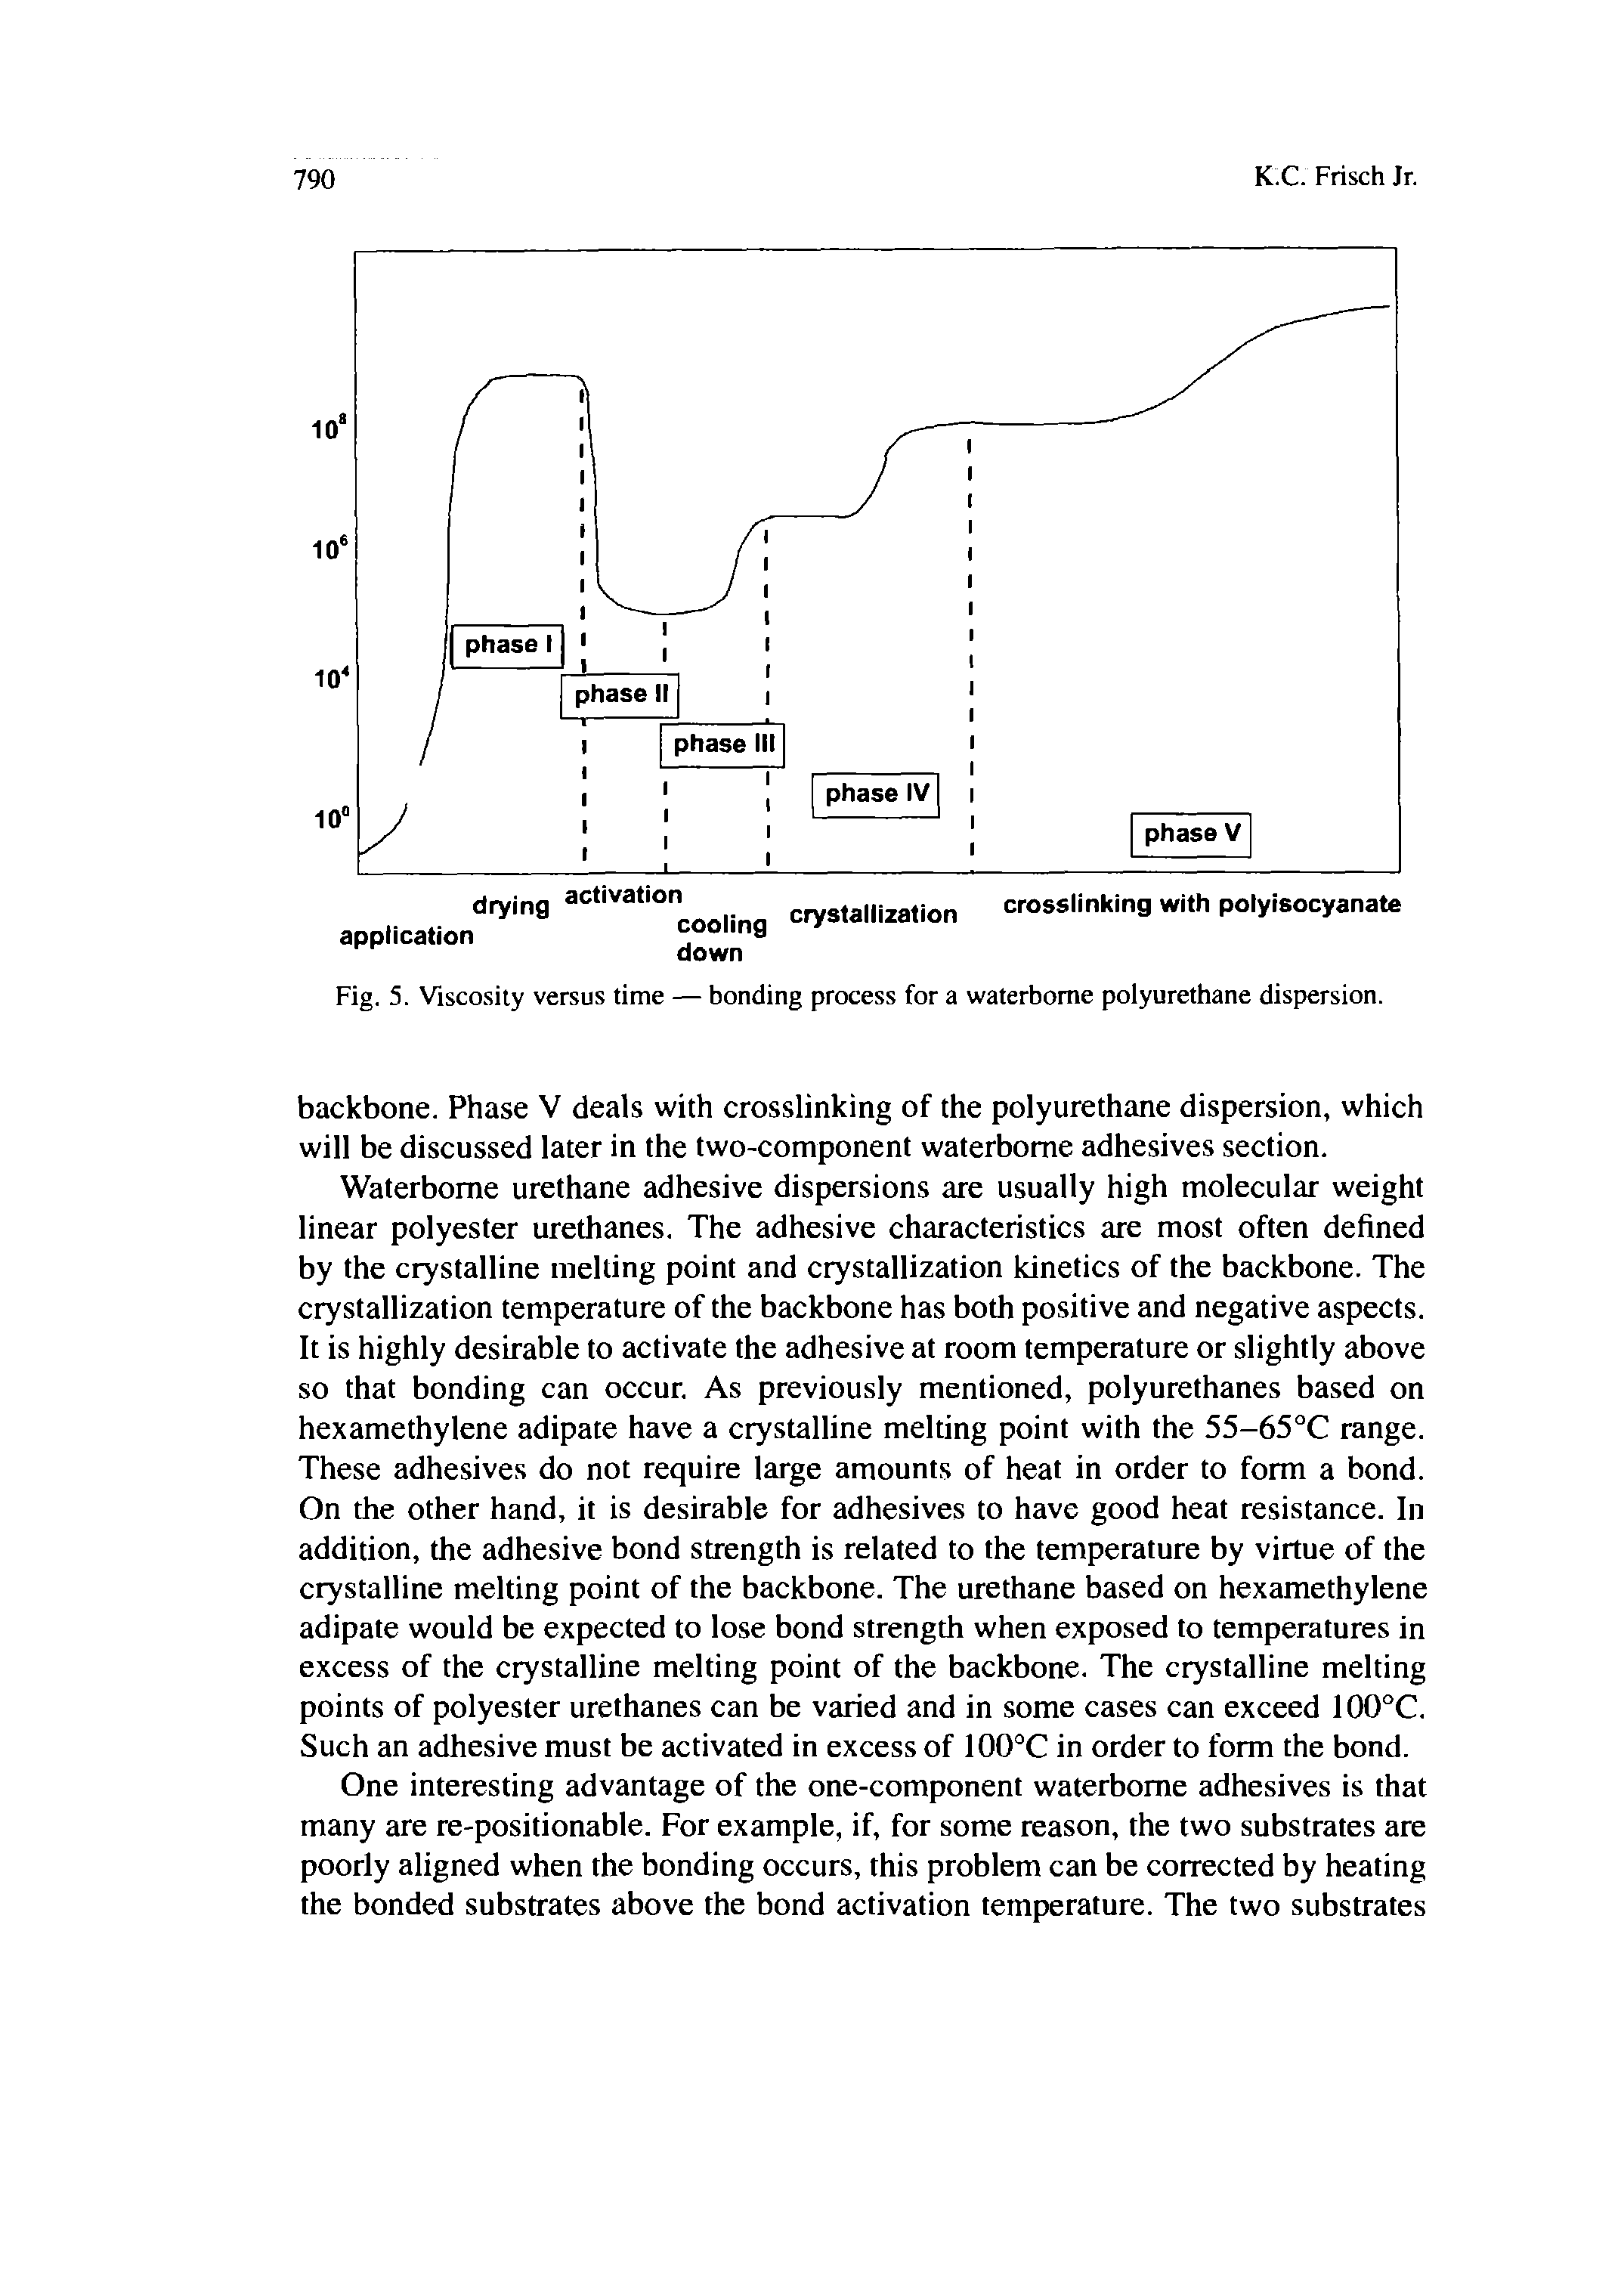 Fig. 5. Viscosity versus time — bonding process for a waterborne polyurethane dispersion.